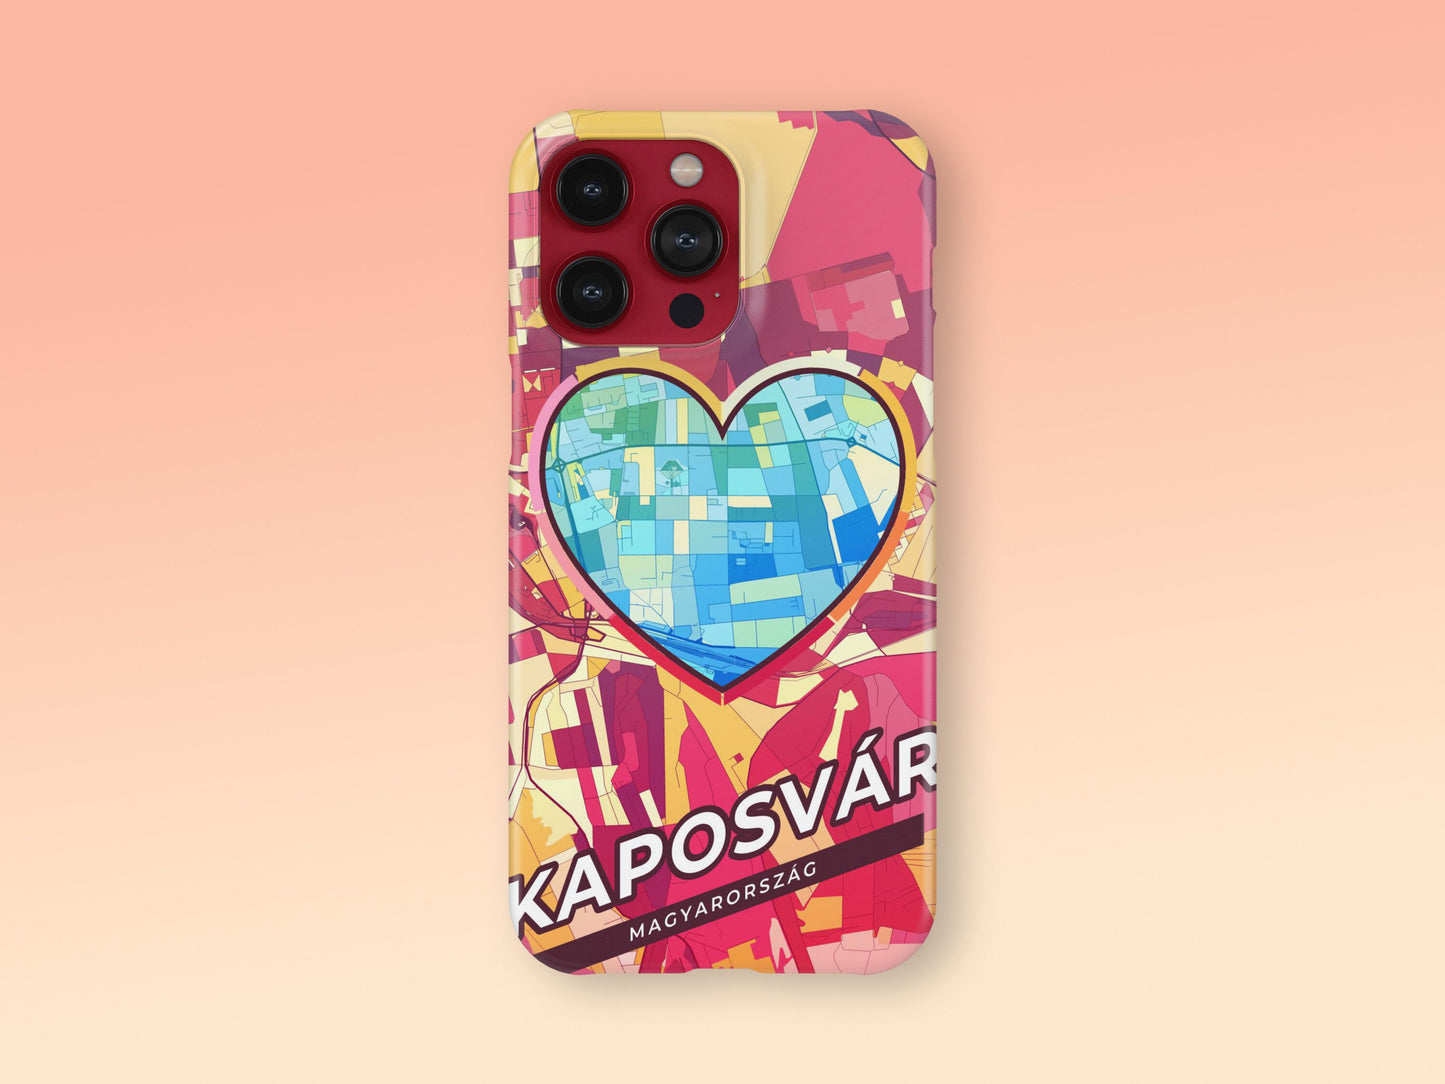 Kaposvár Hungary slim phone case with colorful icon. Birthday, wedding or housewarming gift. Couple match cases. 2